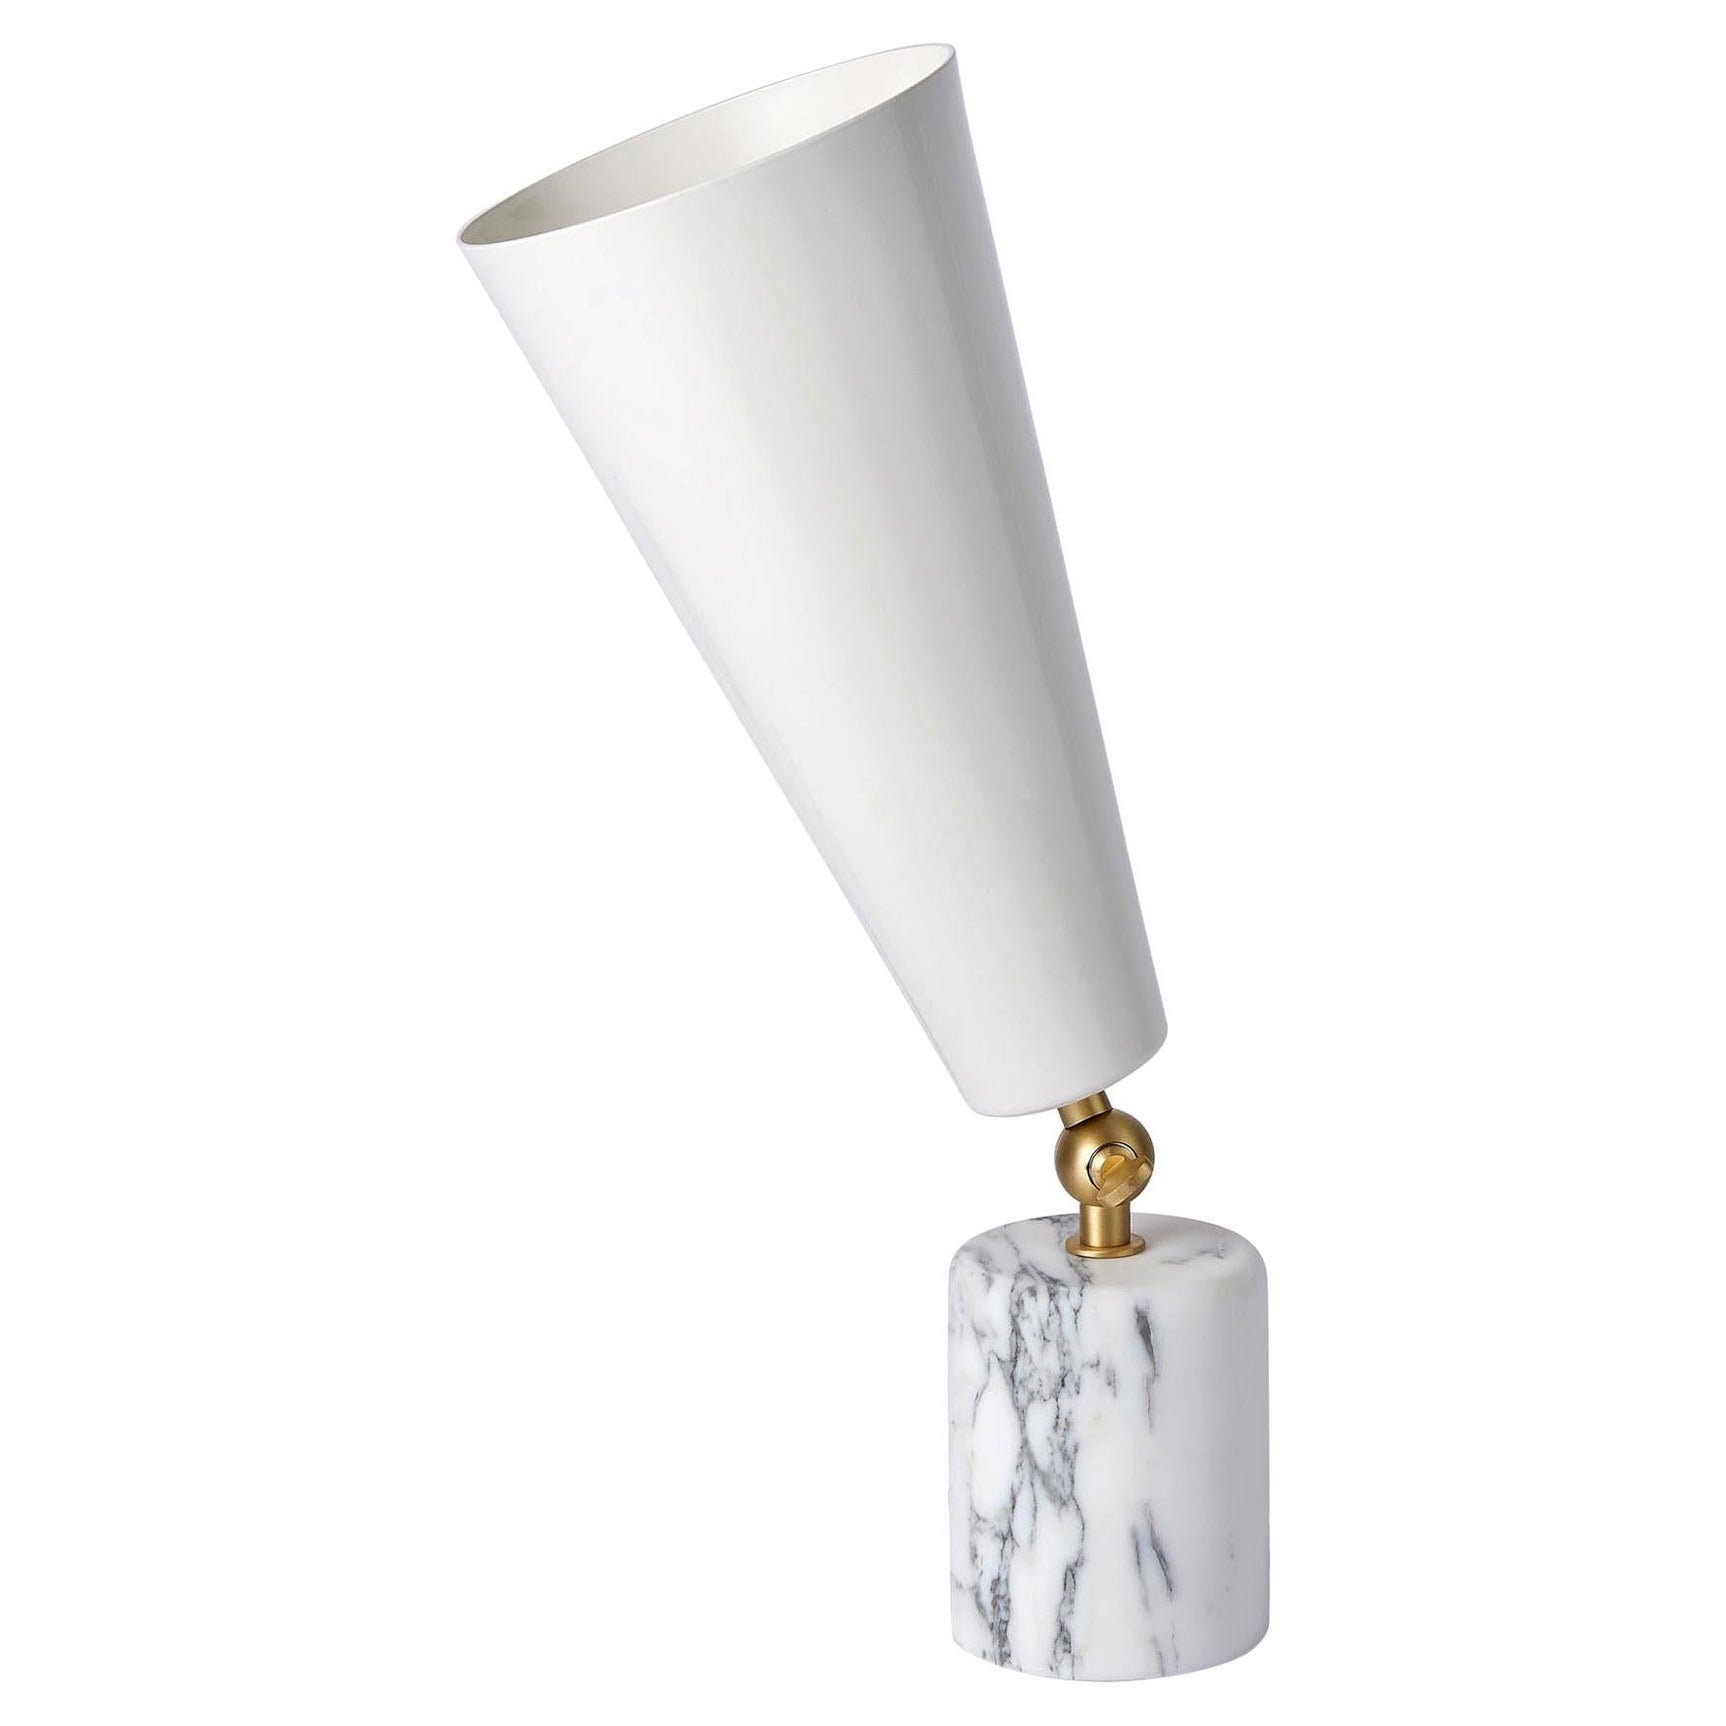 Tato Italia 'Vox' Table Lamp in White Carrara Marble, Satin Brass, and White For Sale